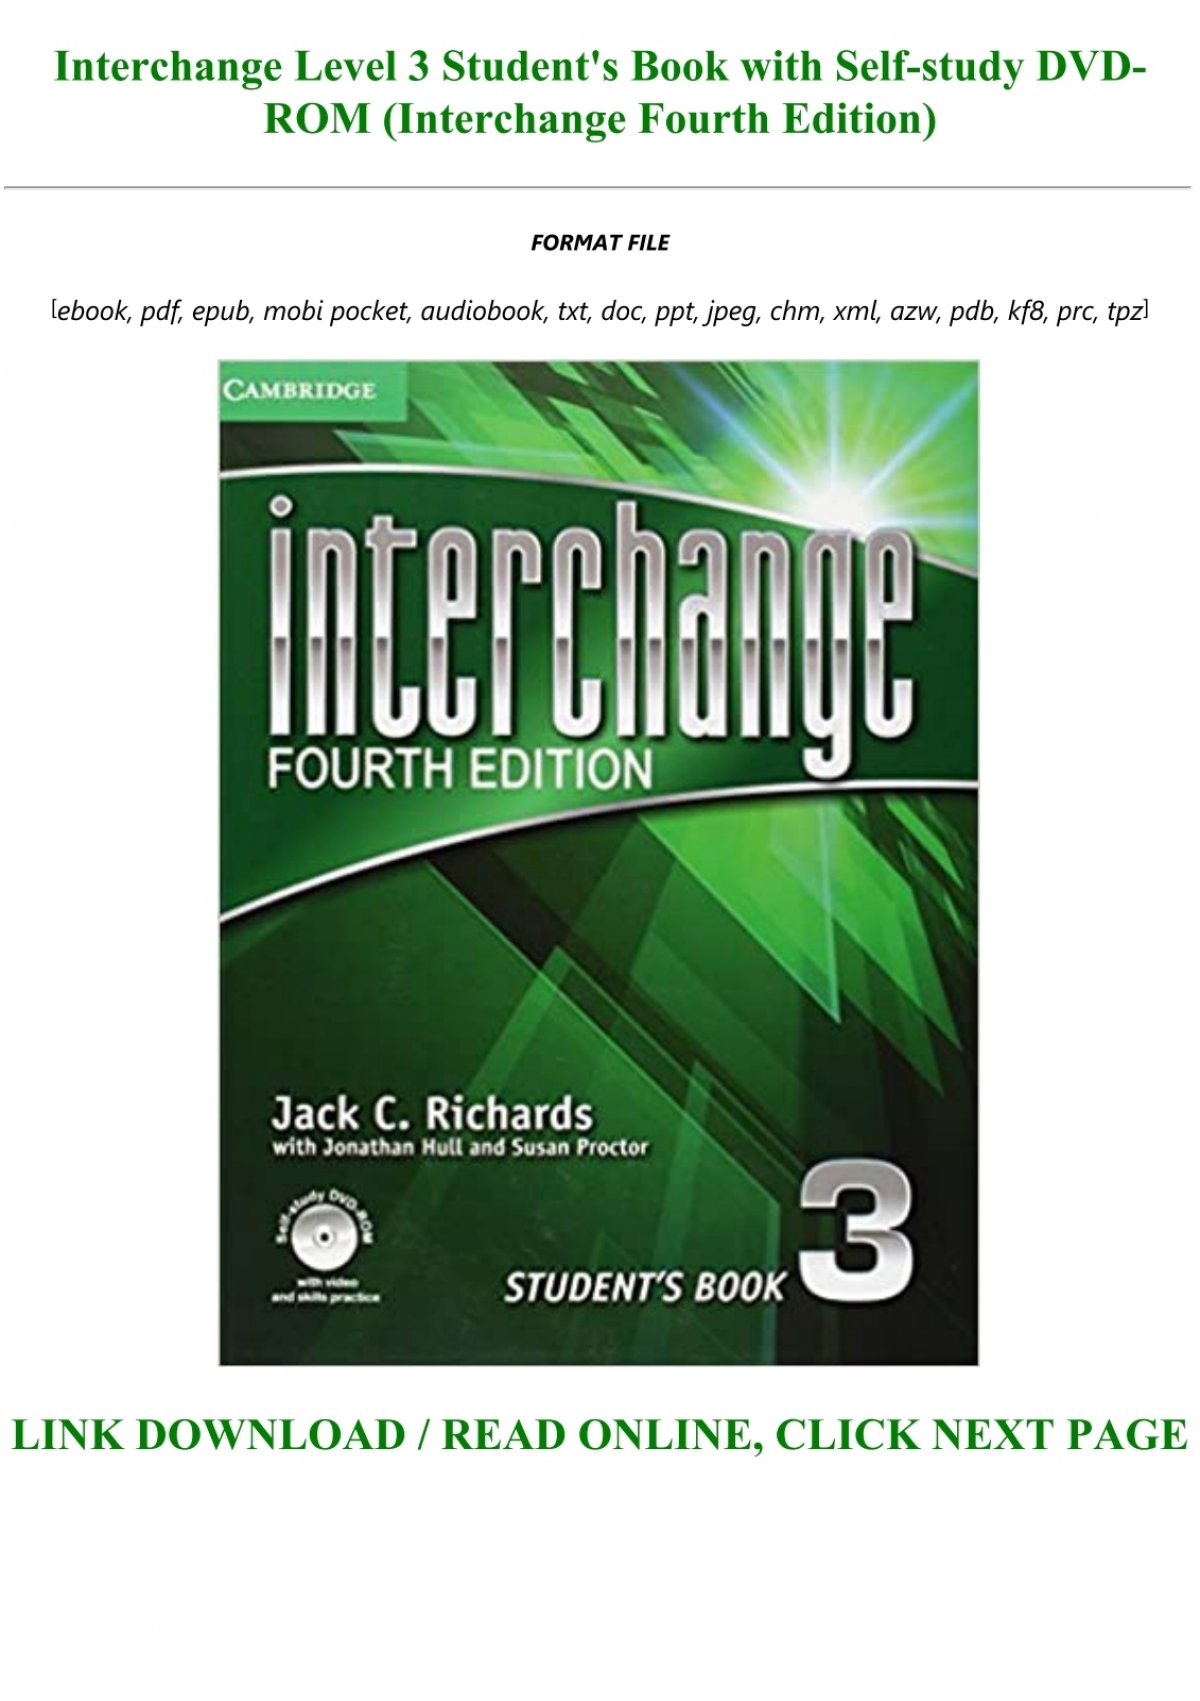 Download Pdf Interchange Level 3 Student S Book With Self Study Dvd Rom Interchange Fourth Edition Full Pdf